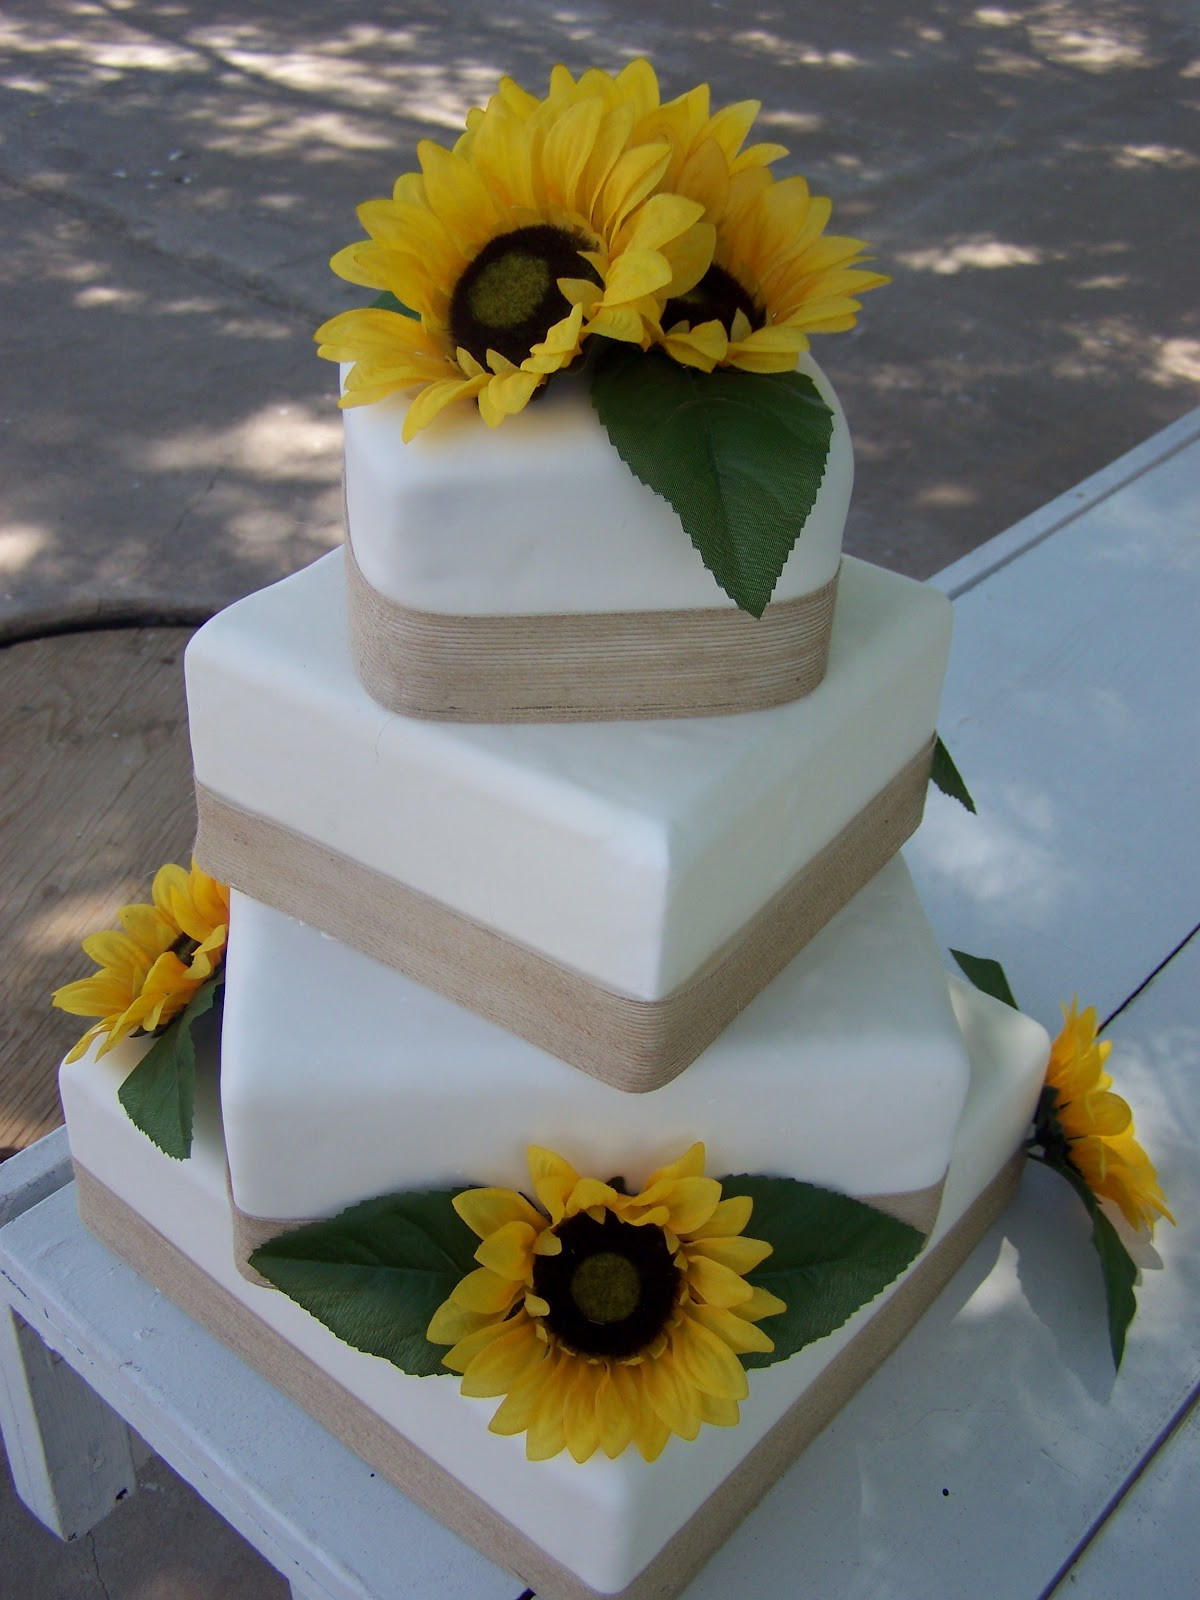 Sunflower Wedding Cakes
 Cake A Licious Sunflower & Burlap Wedding Cake